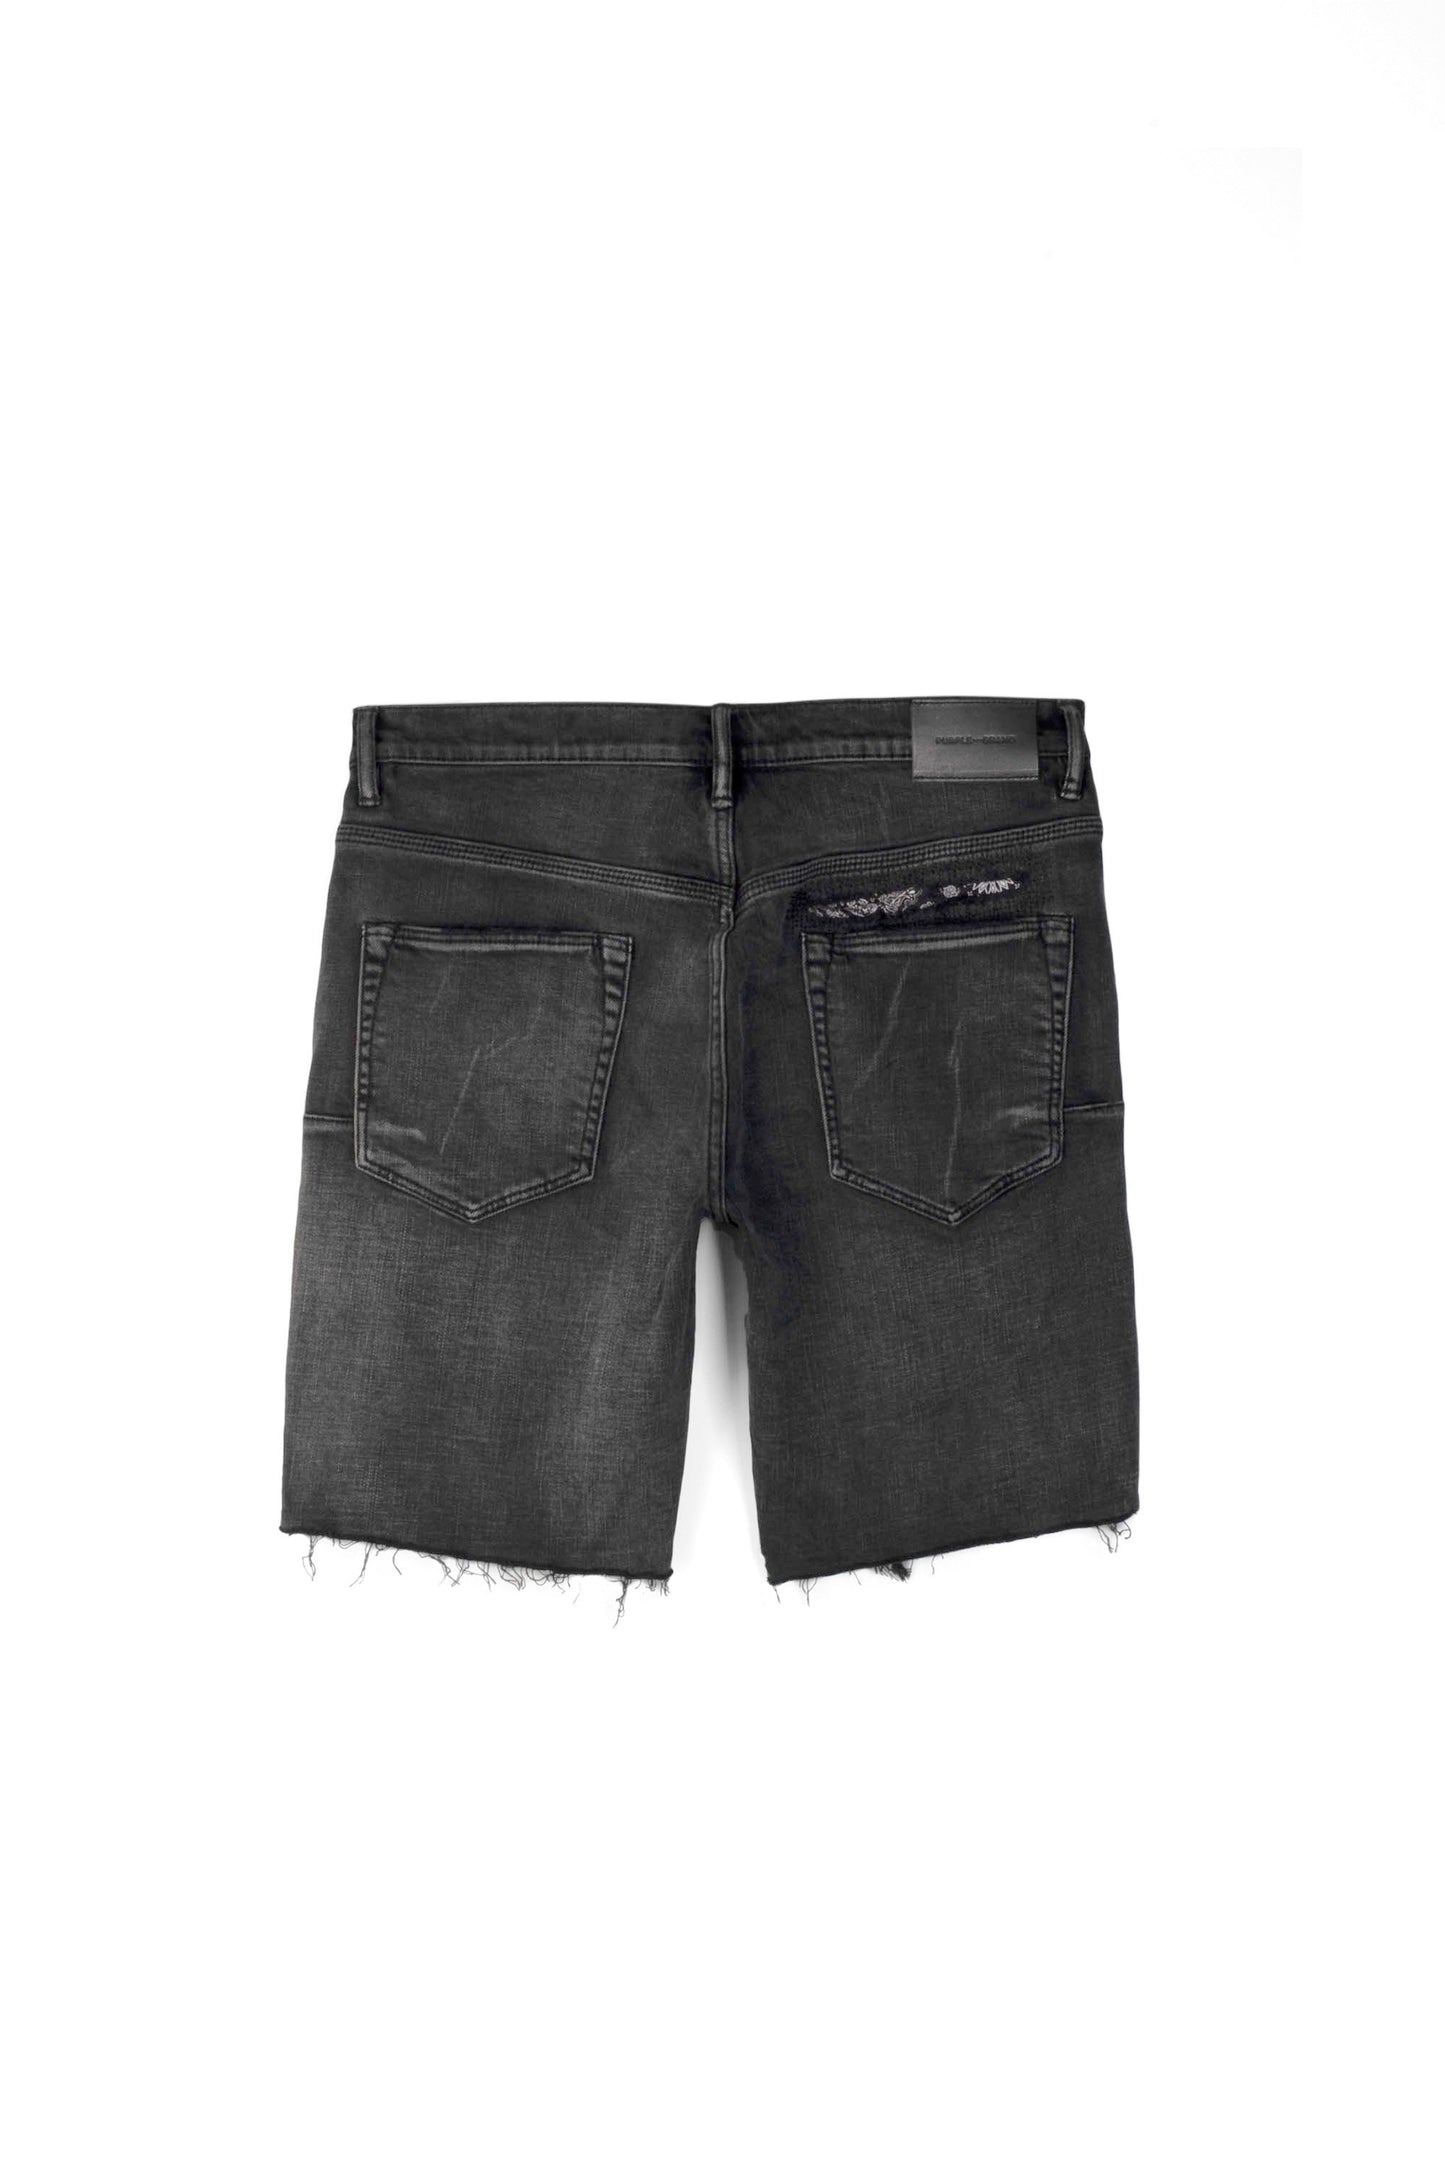 PURPLE BRAND - Men's Denim Jean Short - Mid Rise Short - Style No. P020 - Bandana Patch Work Black - Back